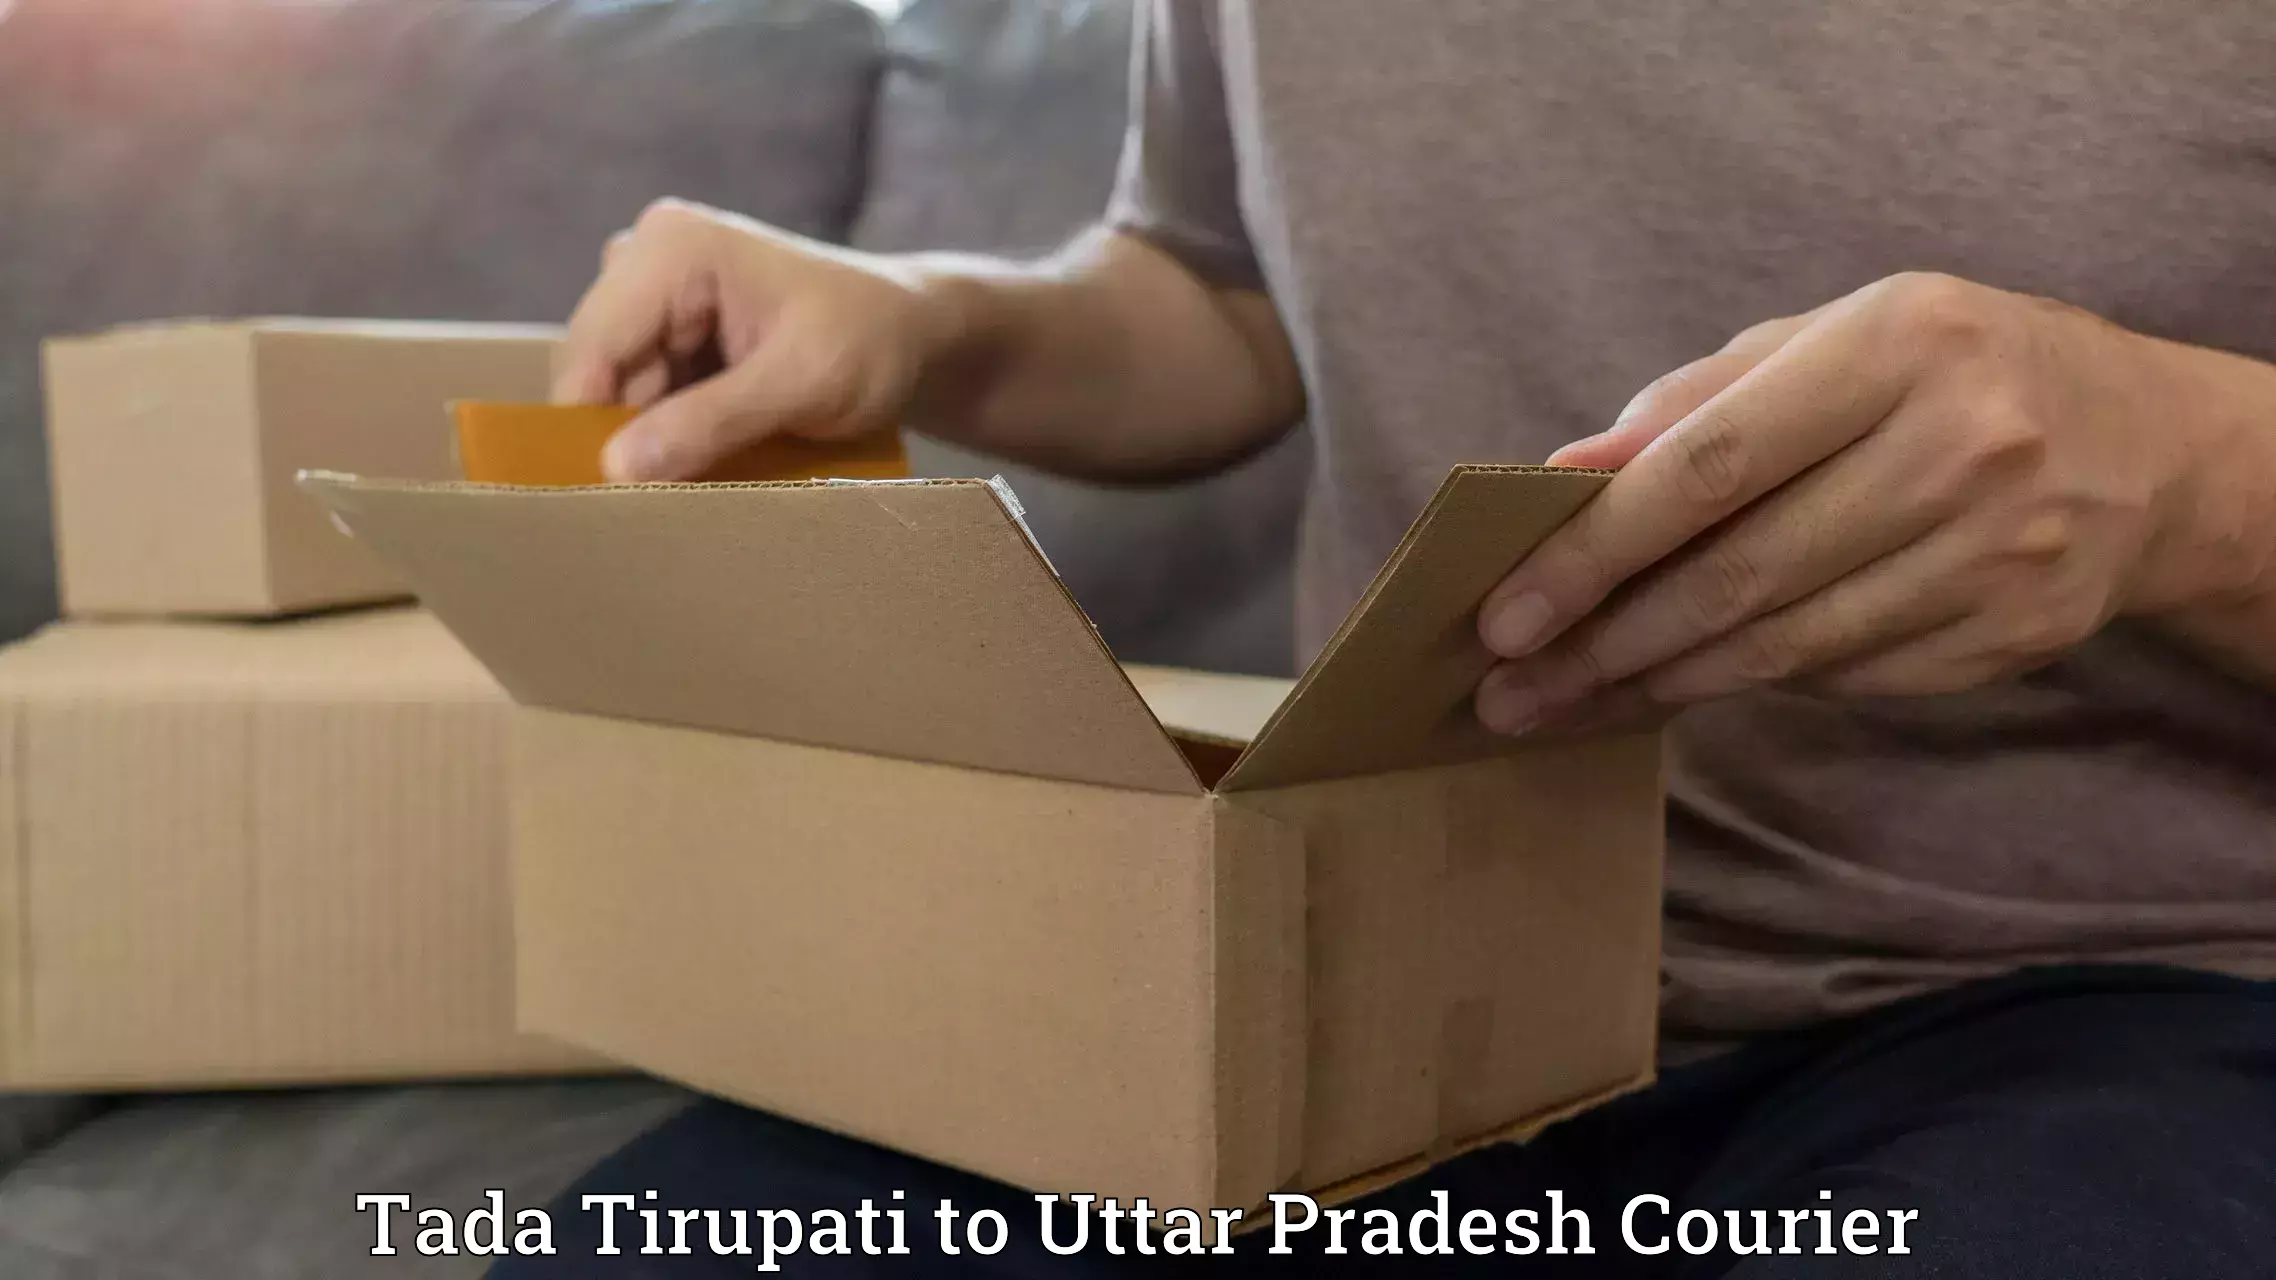 High-speed parcel service Tada Tirupati to Aligarh